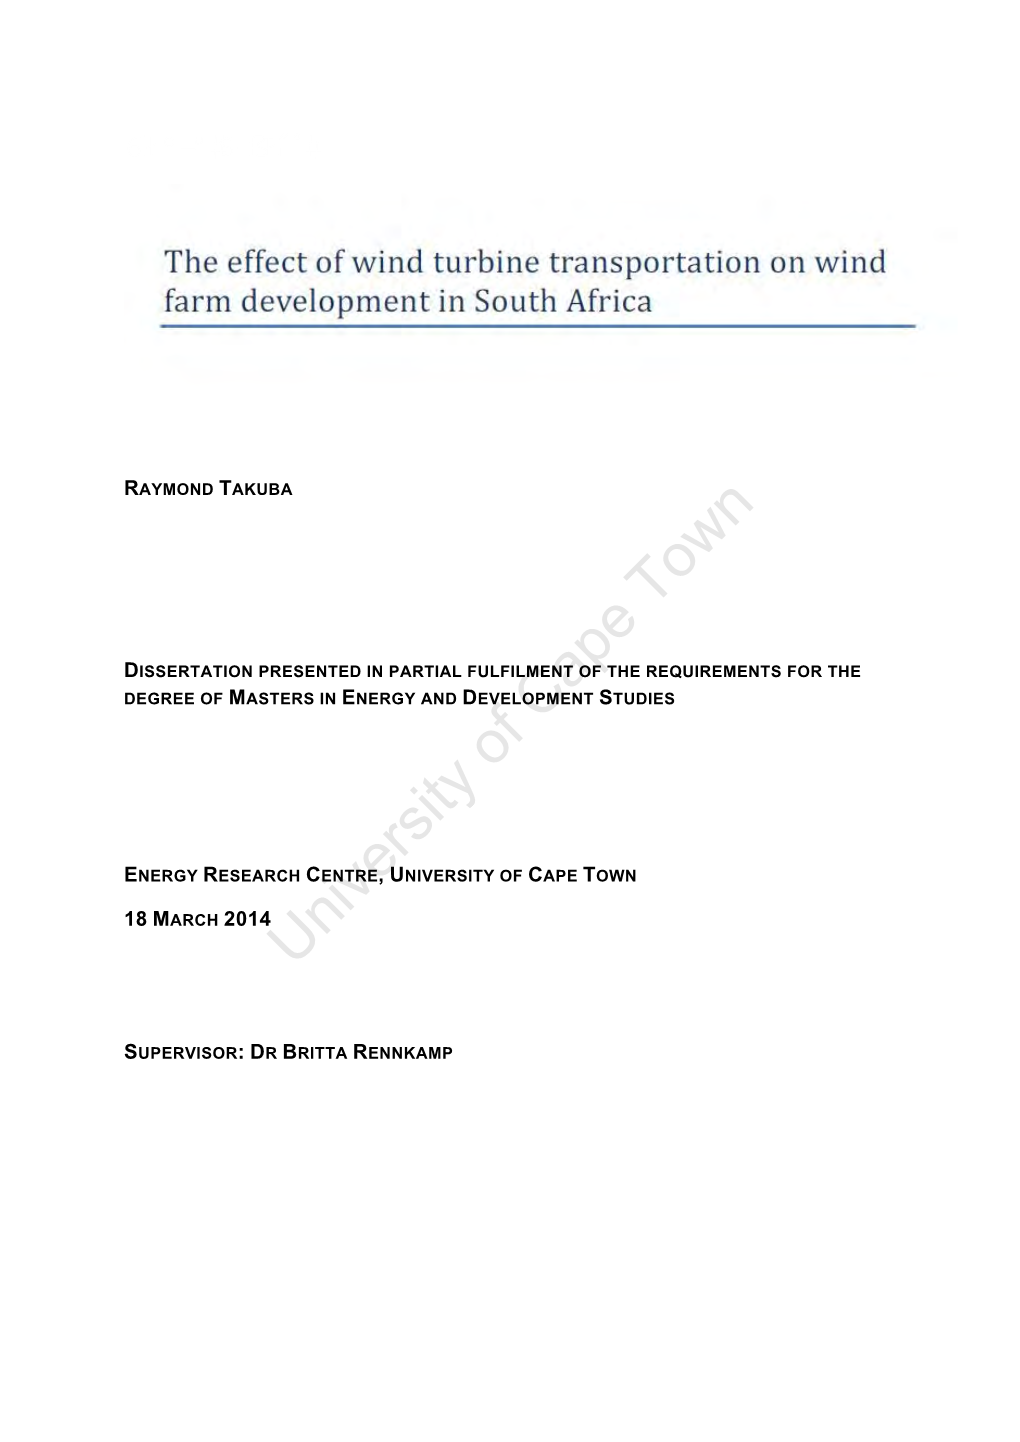 The Effect of Wind Turbine Transportation on Wind Farm